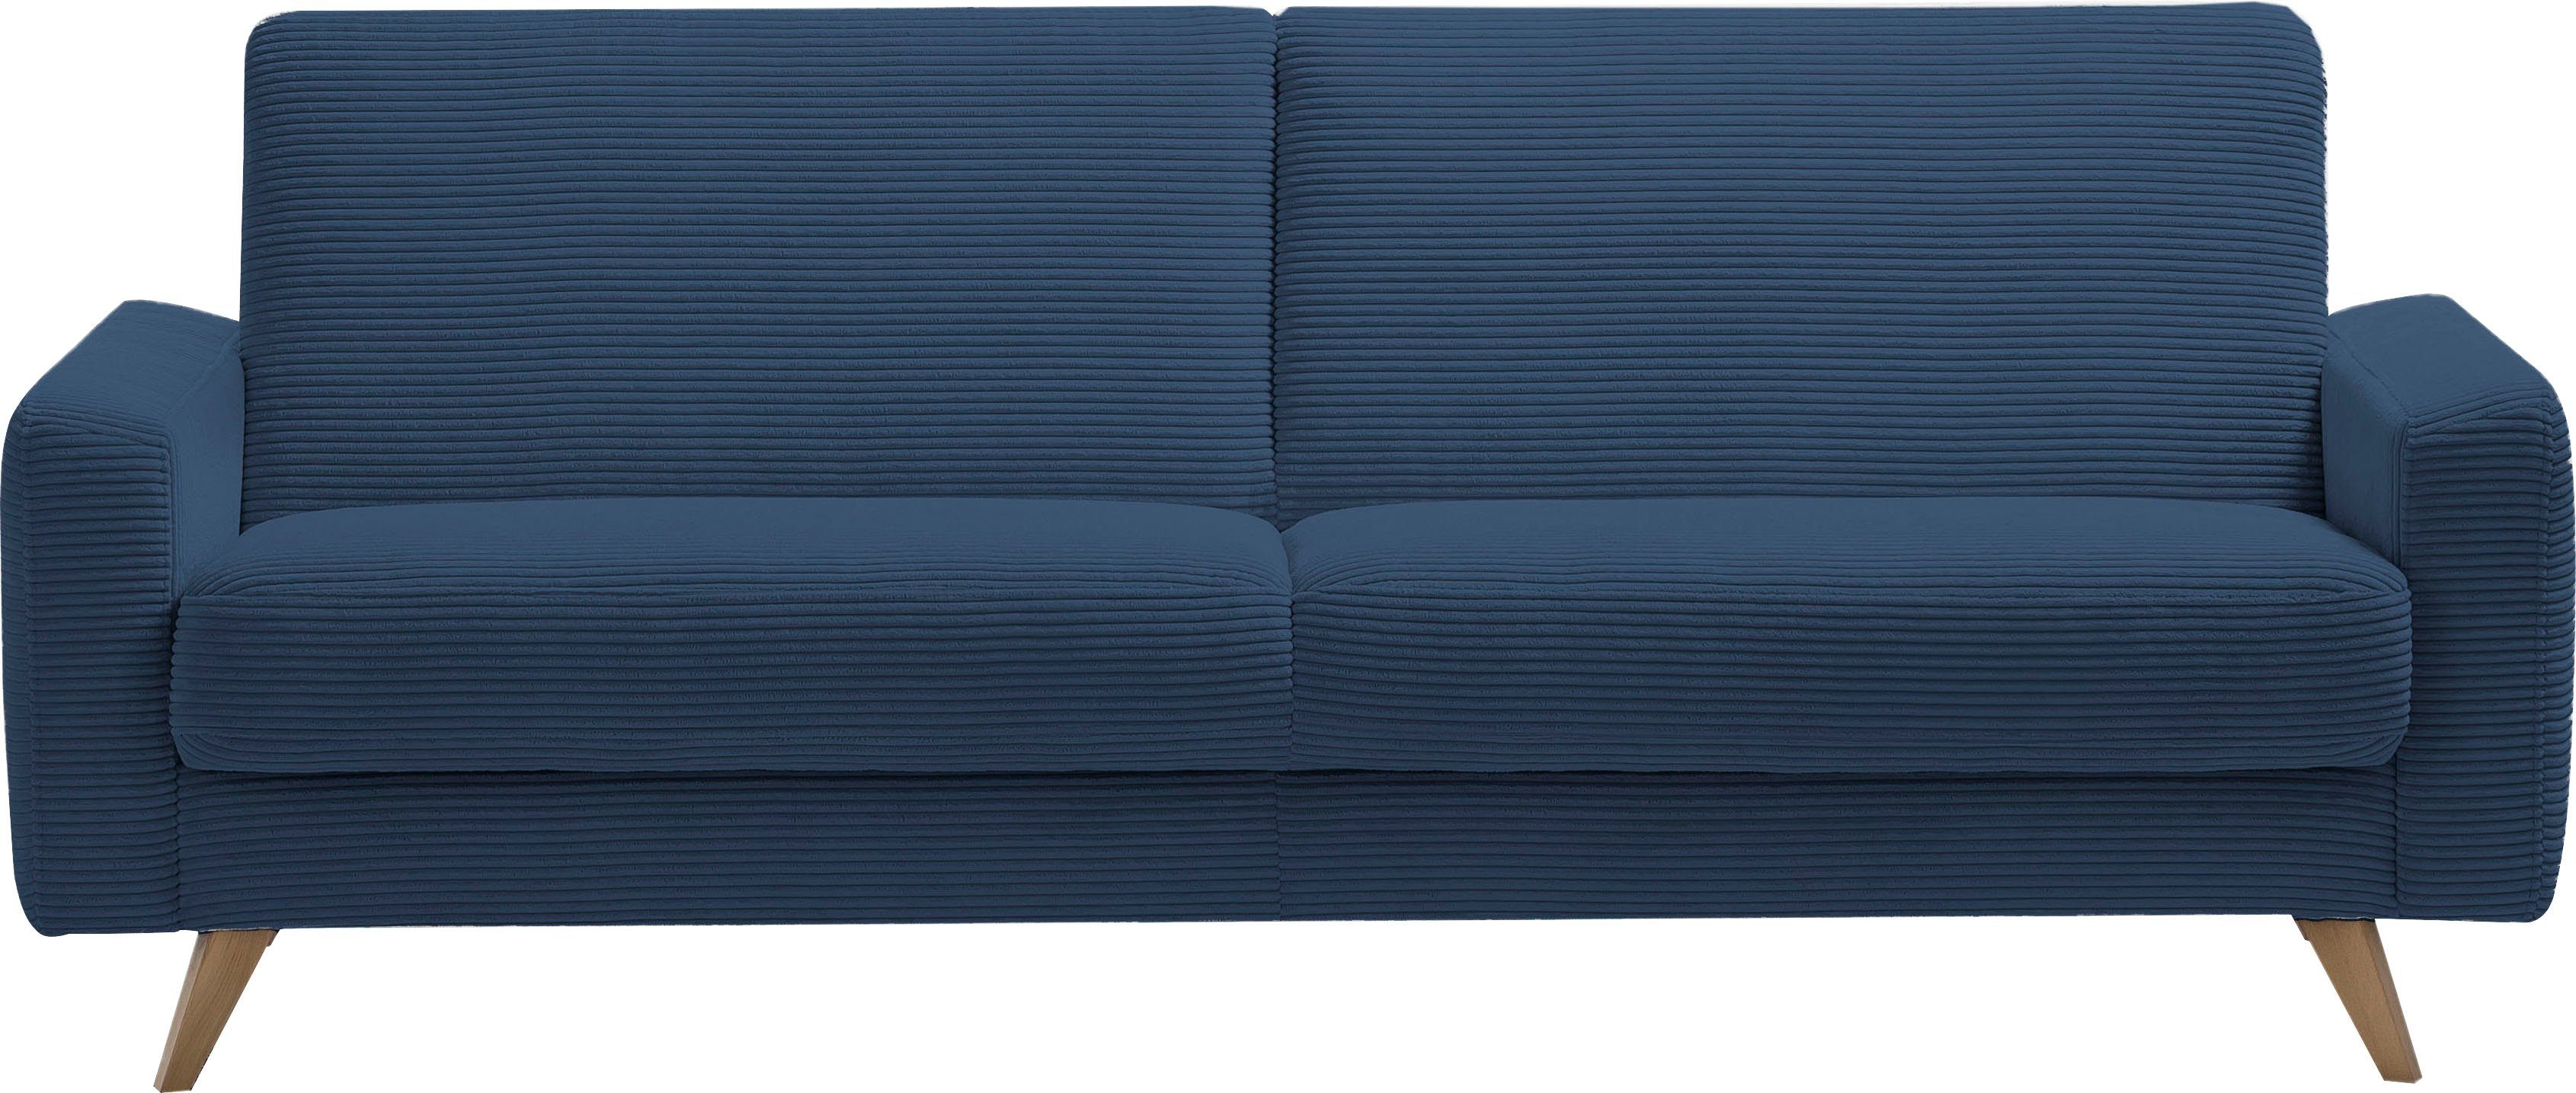 exxpo - 3-Sitzer Samso, navy Bettkasten Inklusive sofa fashion Bettfunktion und